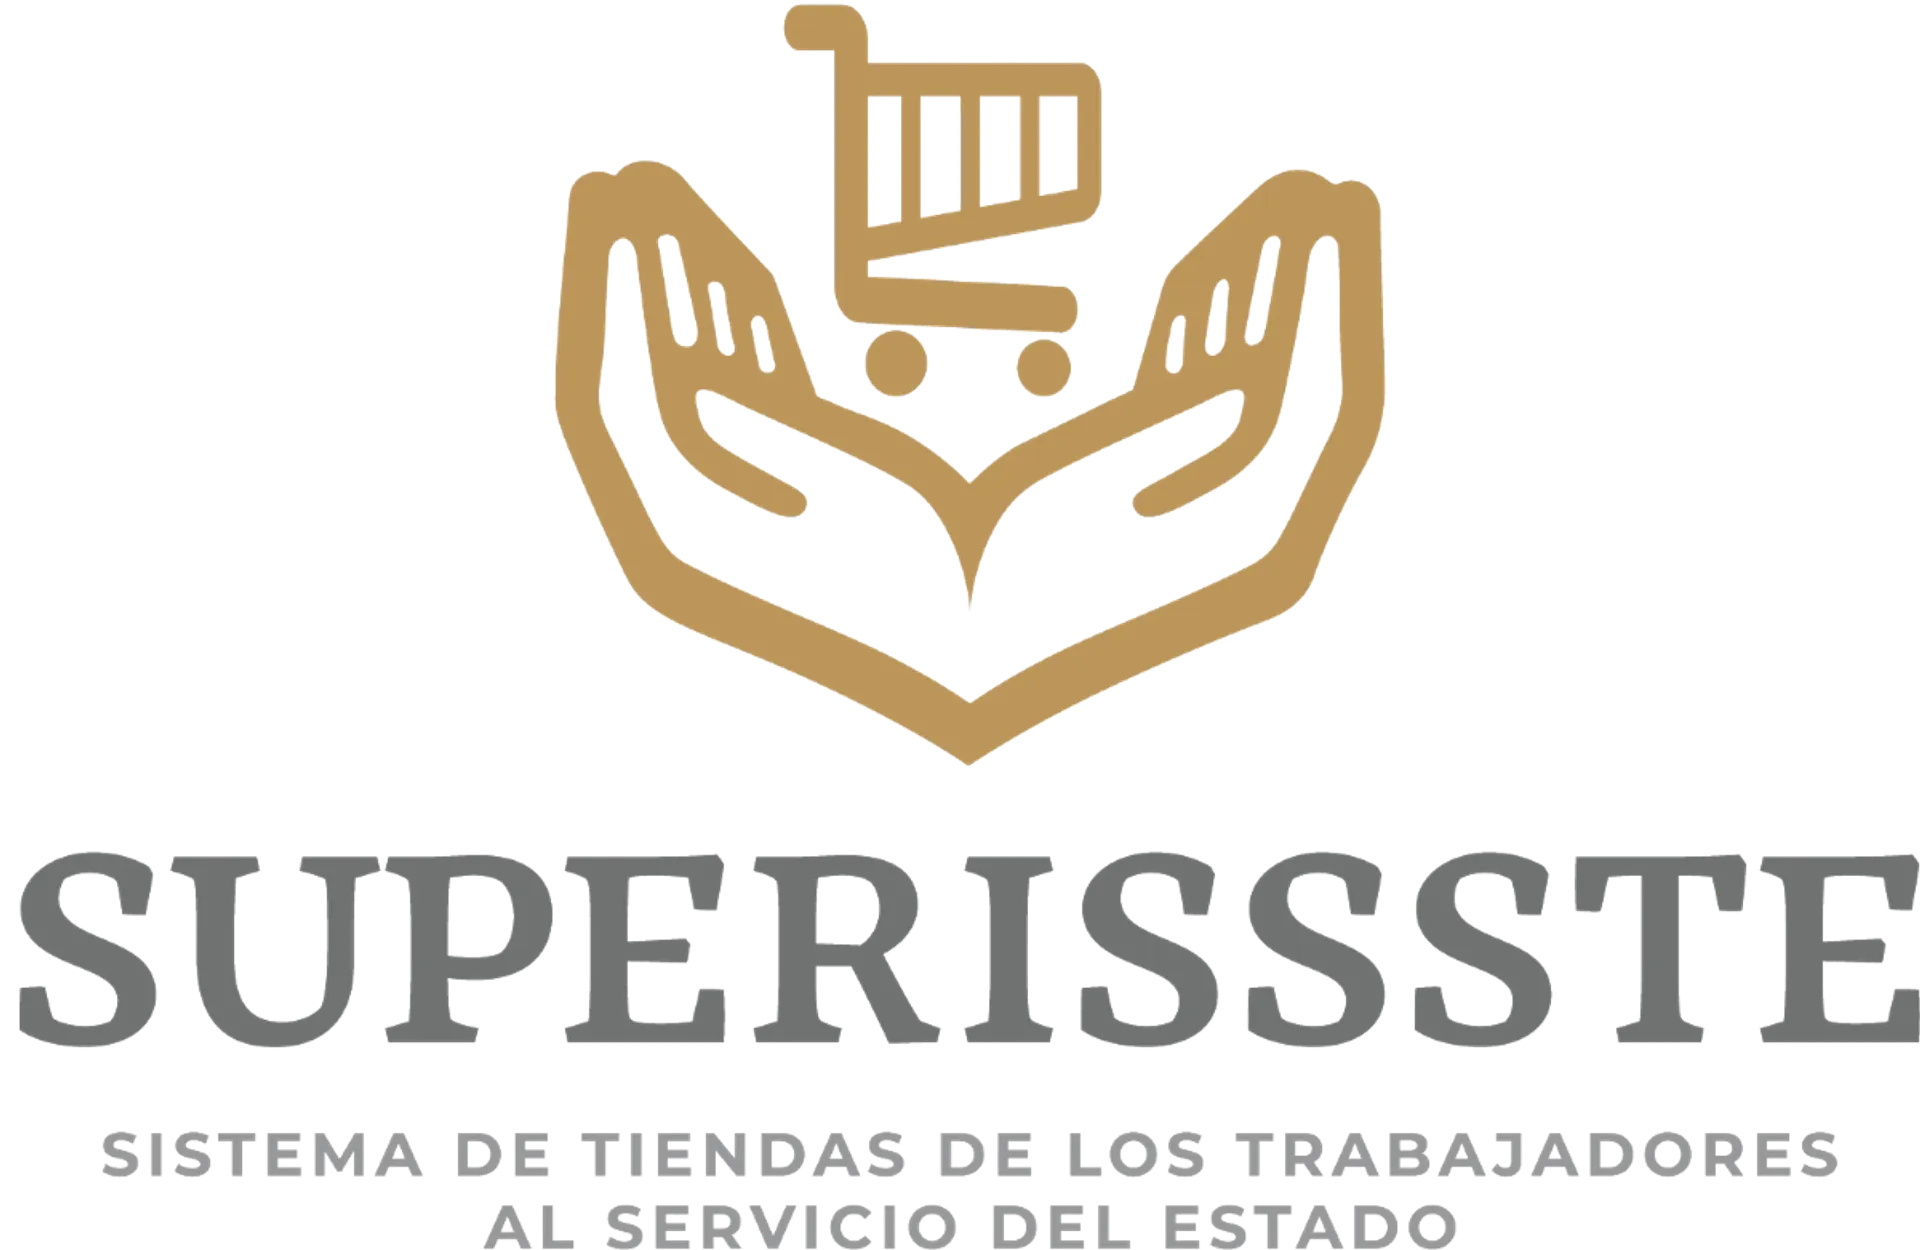 SUPERISSSTE logo